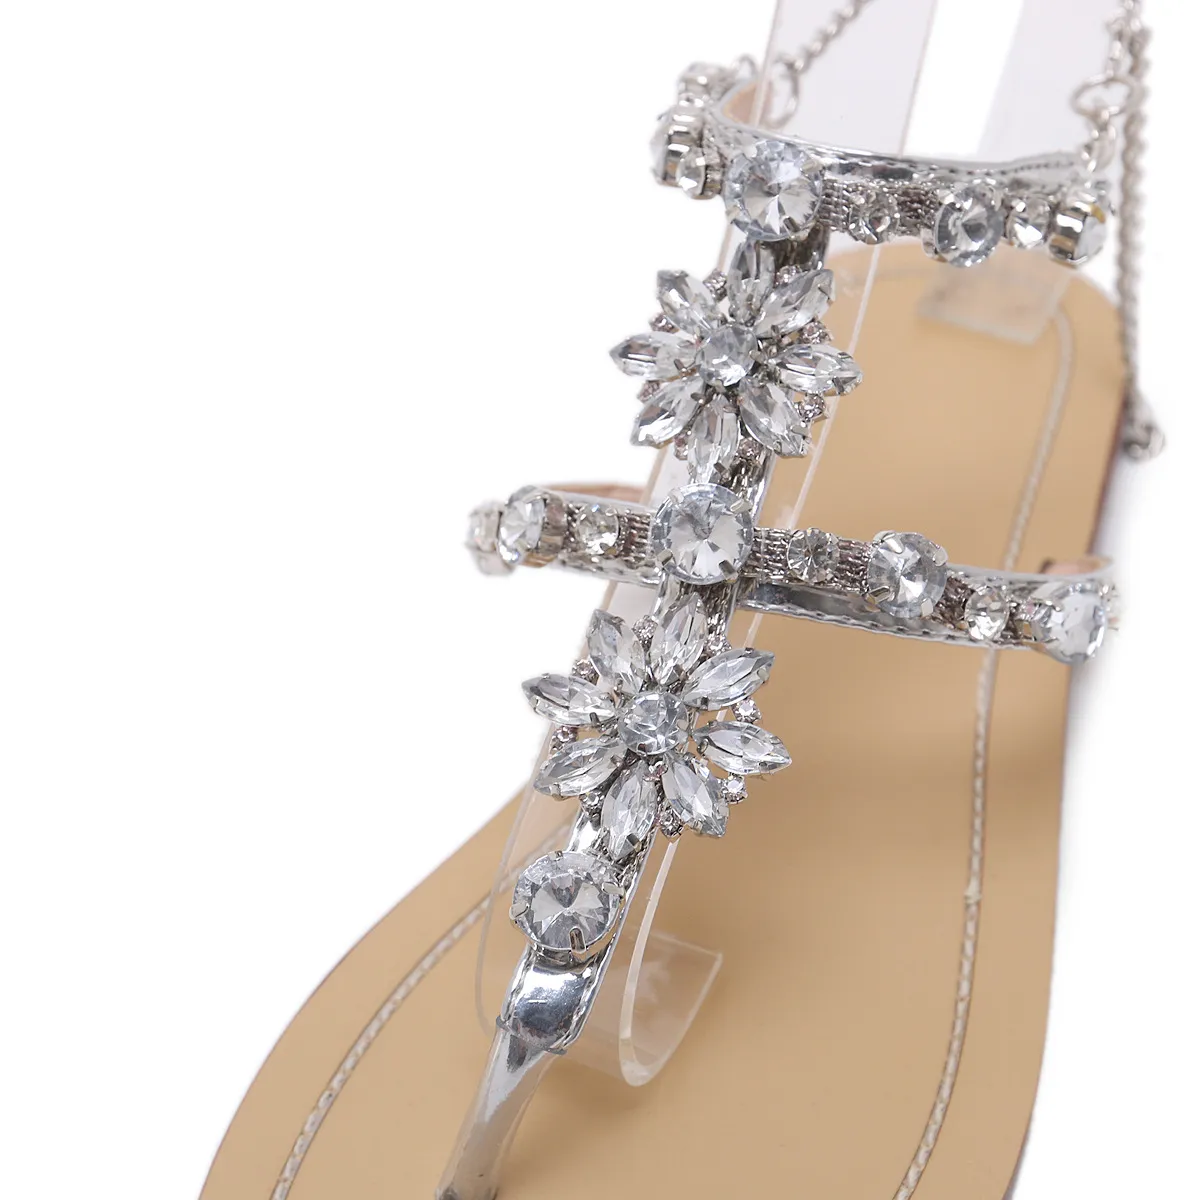 Stunning Bling Bling Woman Sandals Women Shoes Rhinestones Chains Thong Gladiator Flat Sandals Crystal Chaussure Plus Size 46 Tenis Feminino